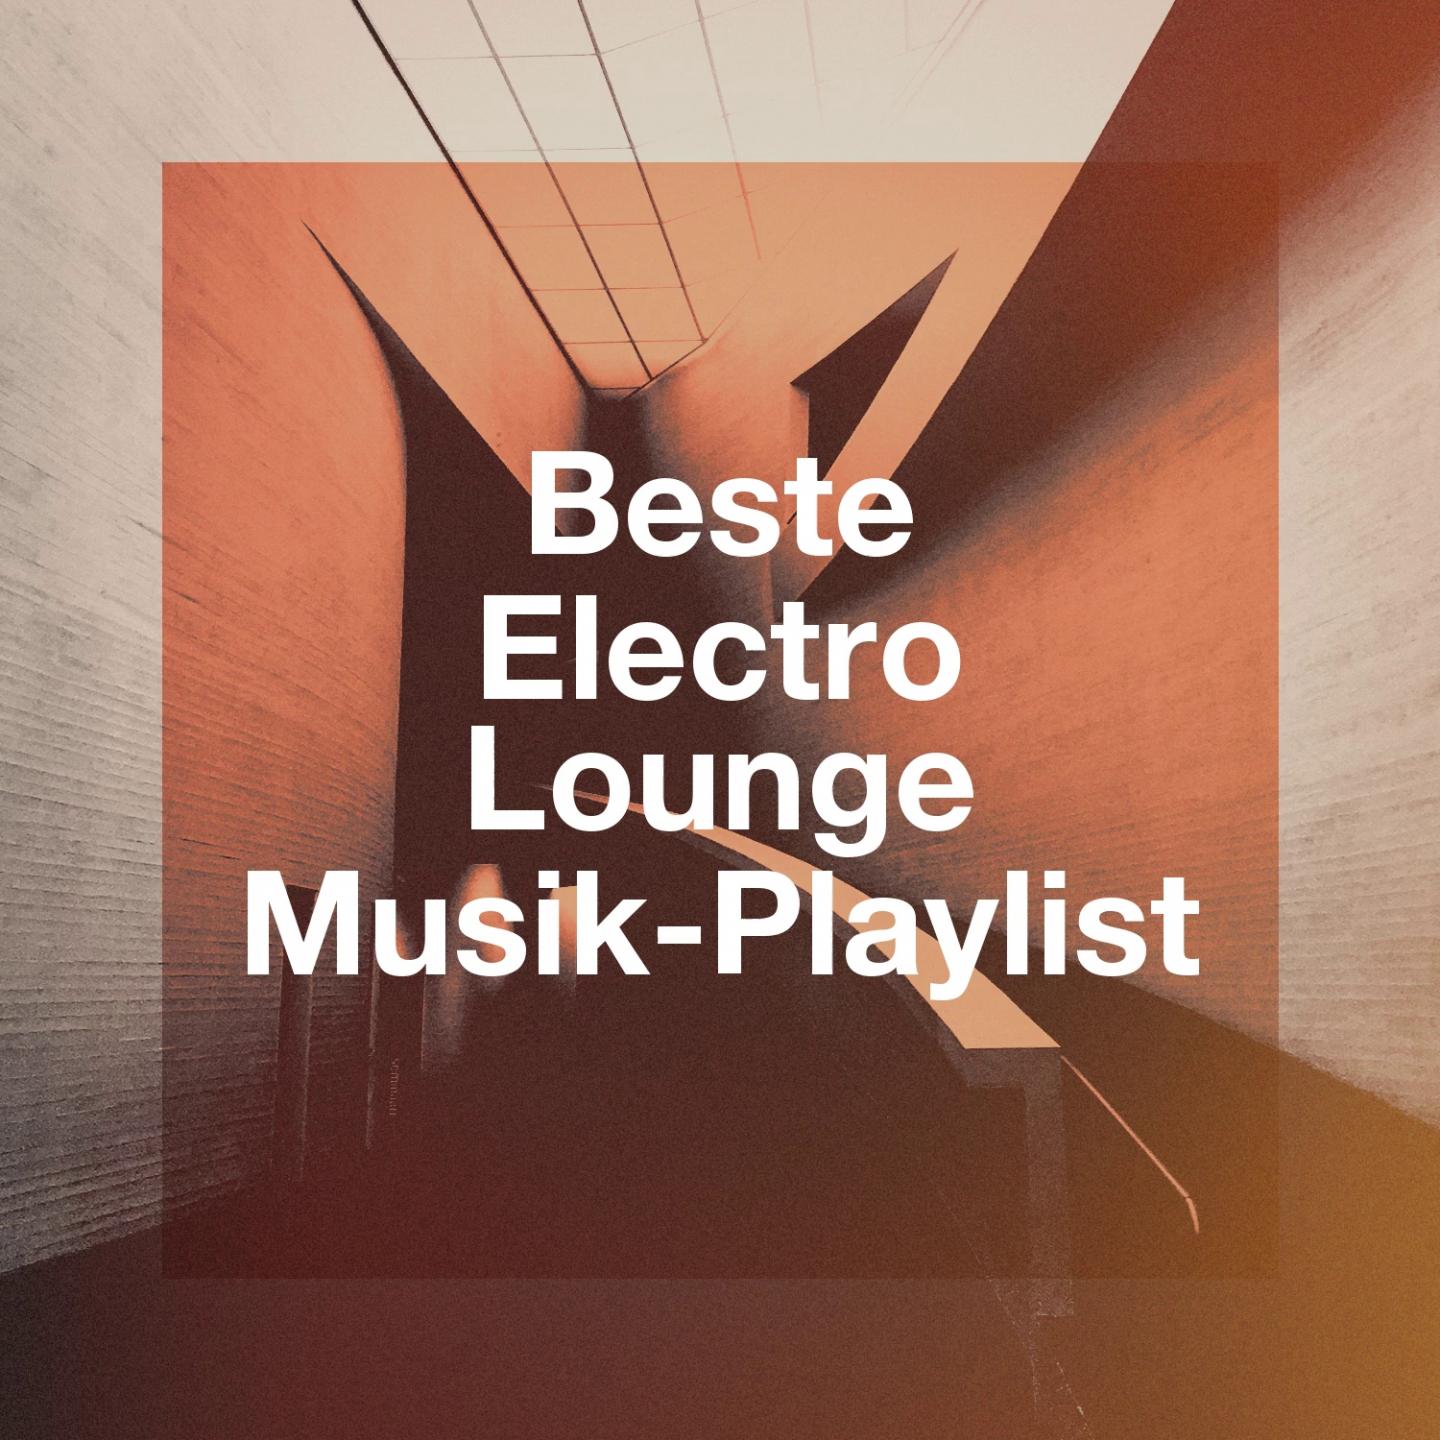 Beste Electro Lounge Musik-Playlist